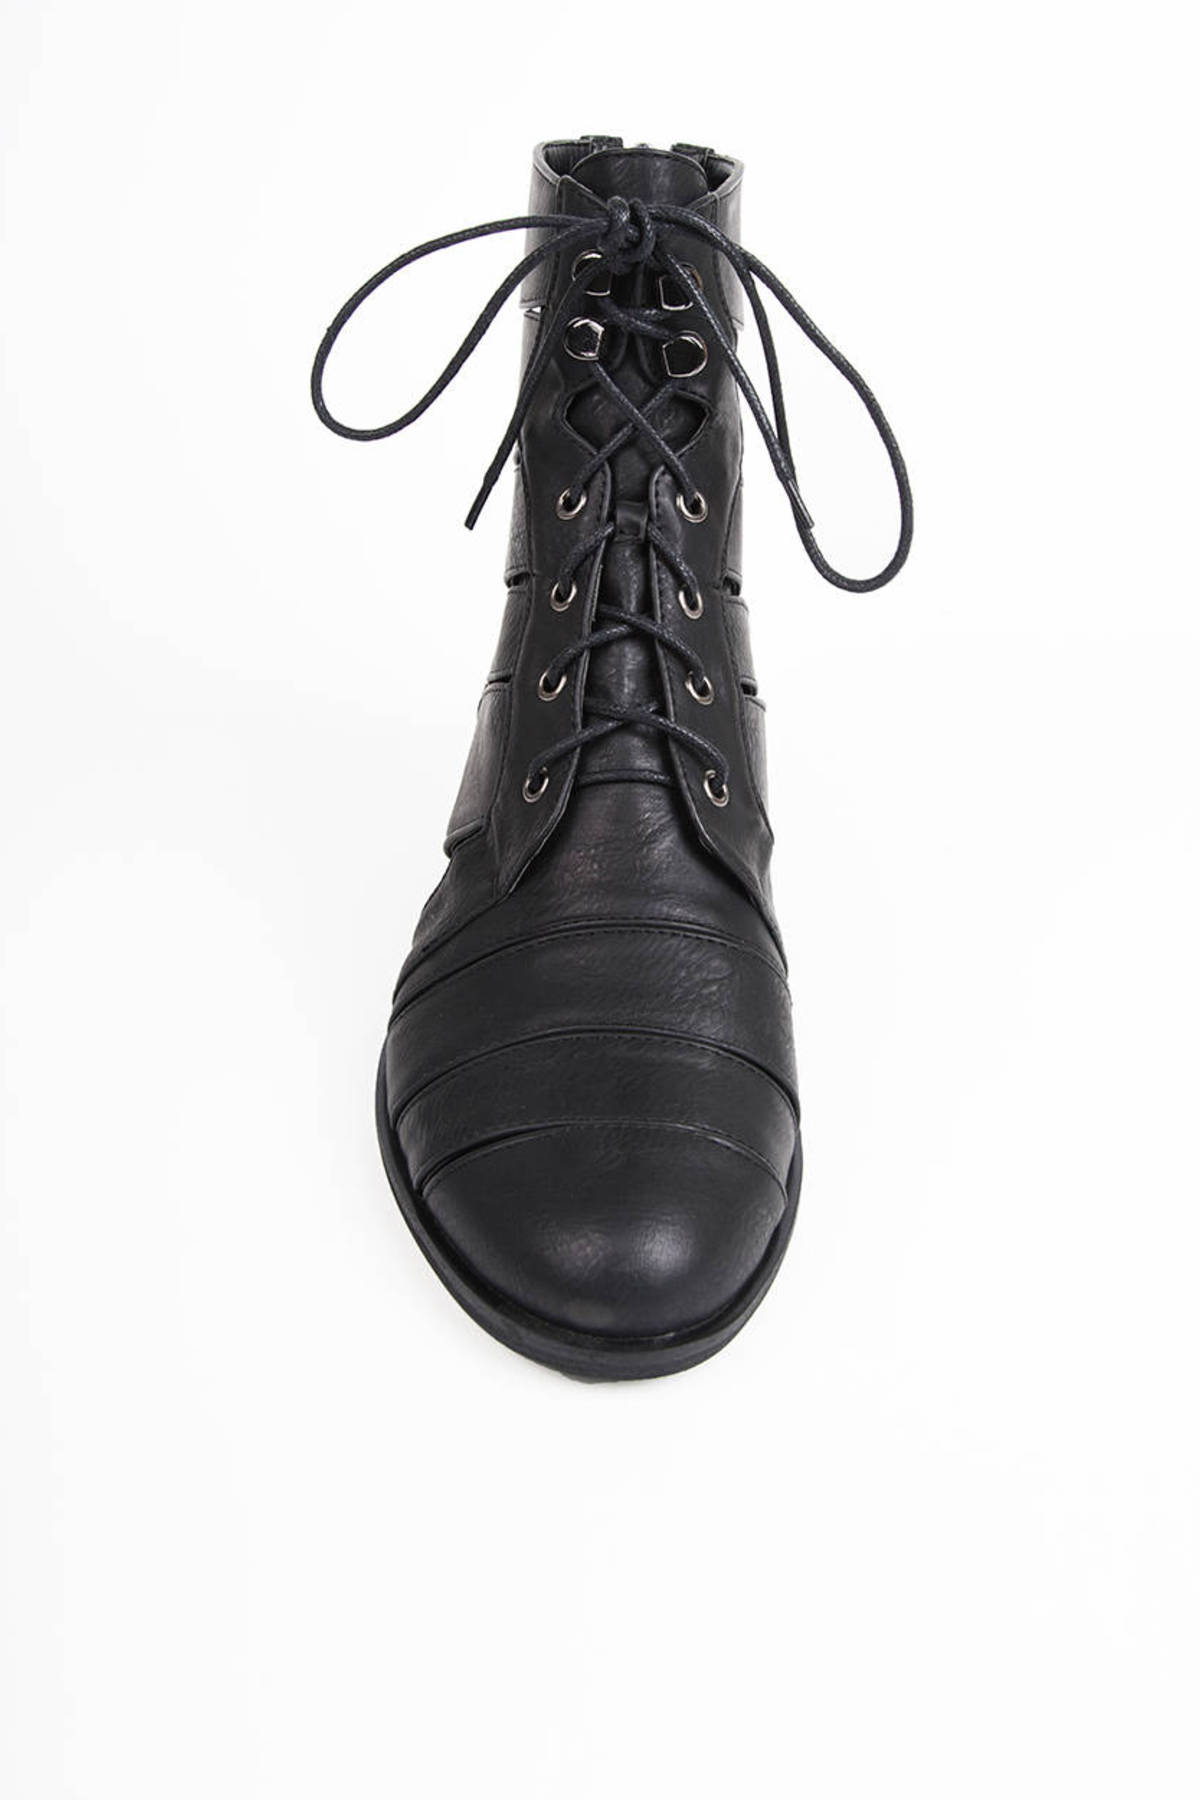 Christina Cutout Boots in Black - $30 | Tobi US